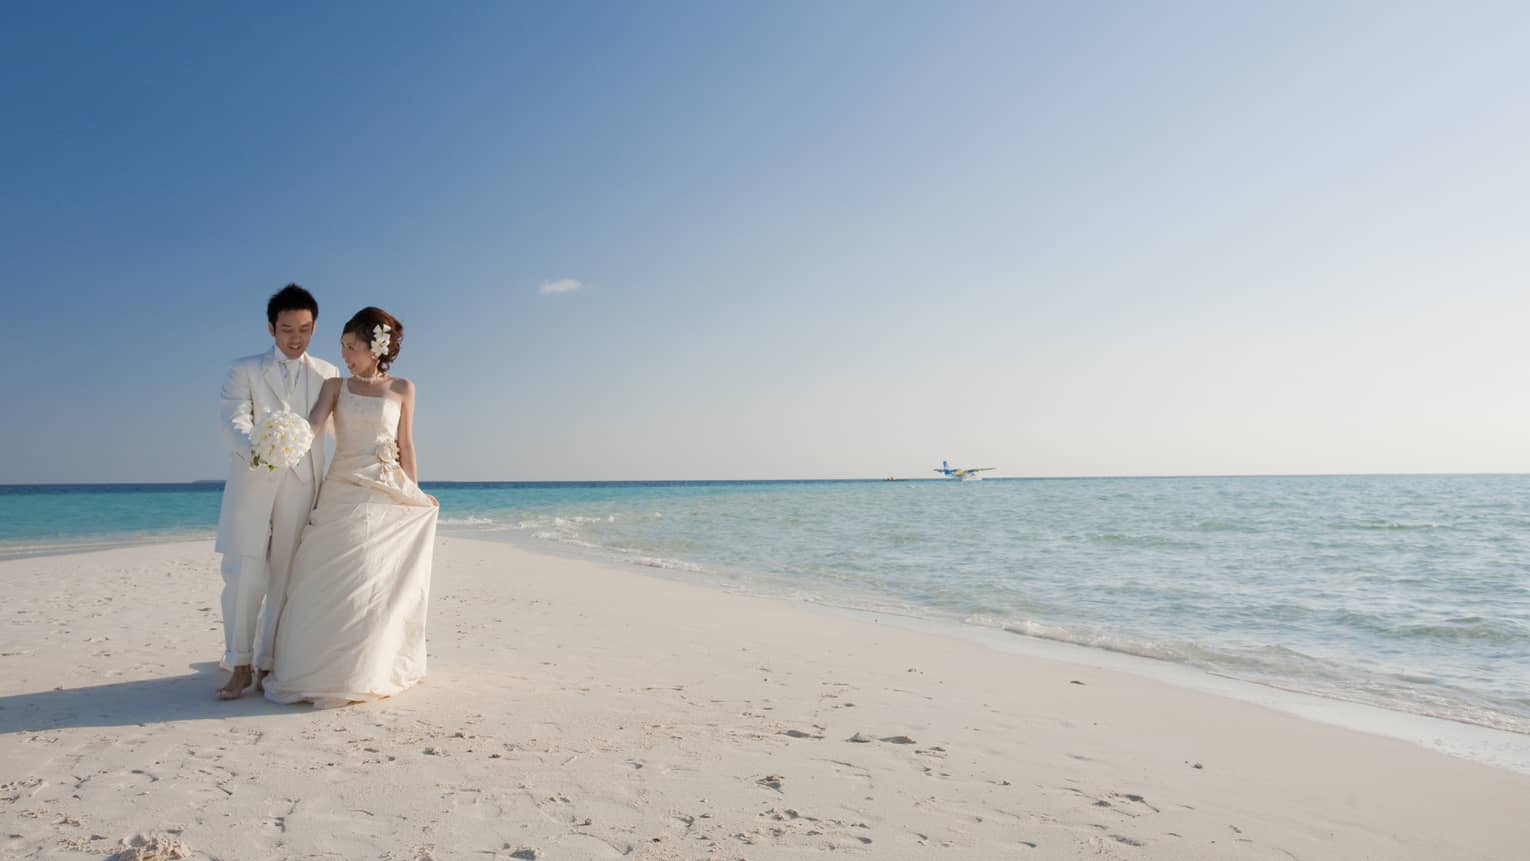 Bride and groom wearing white walk along sandbar by ocean